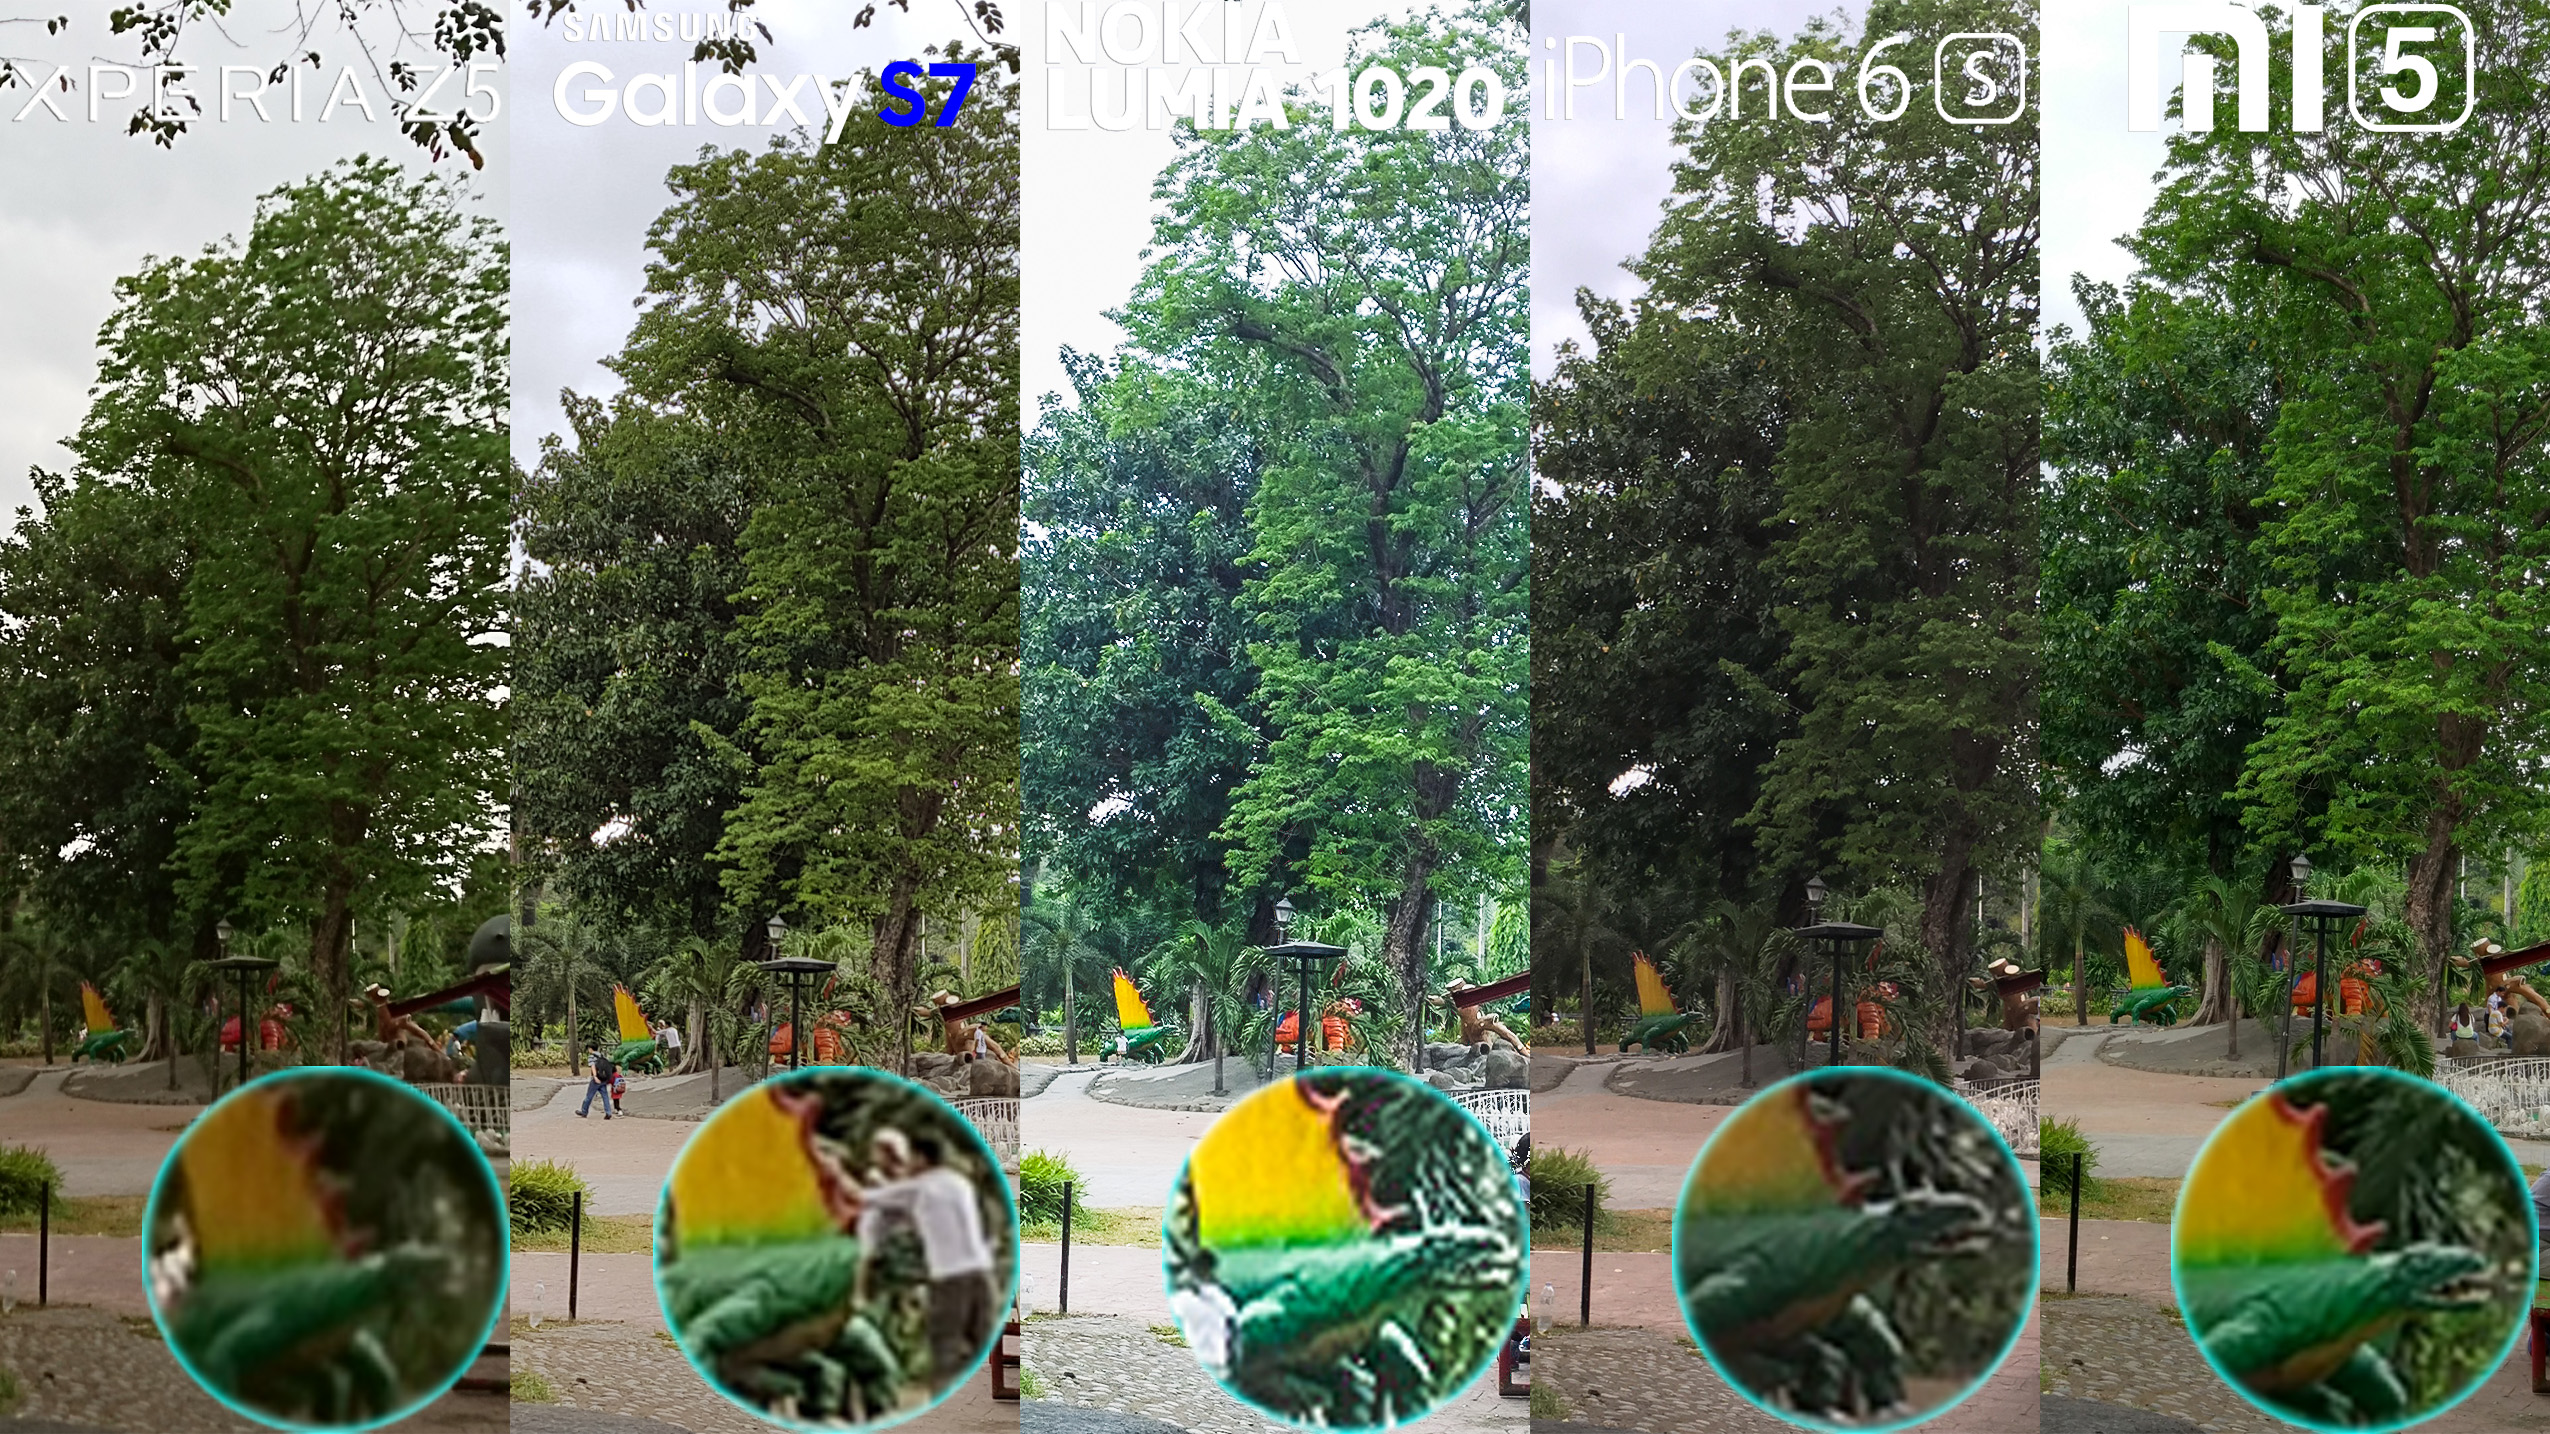 Тест камеры iphone 6s